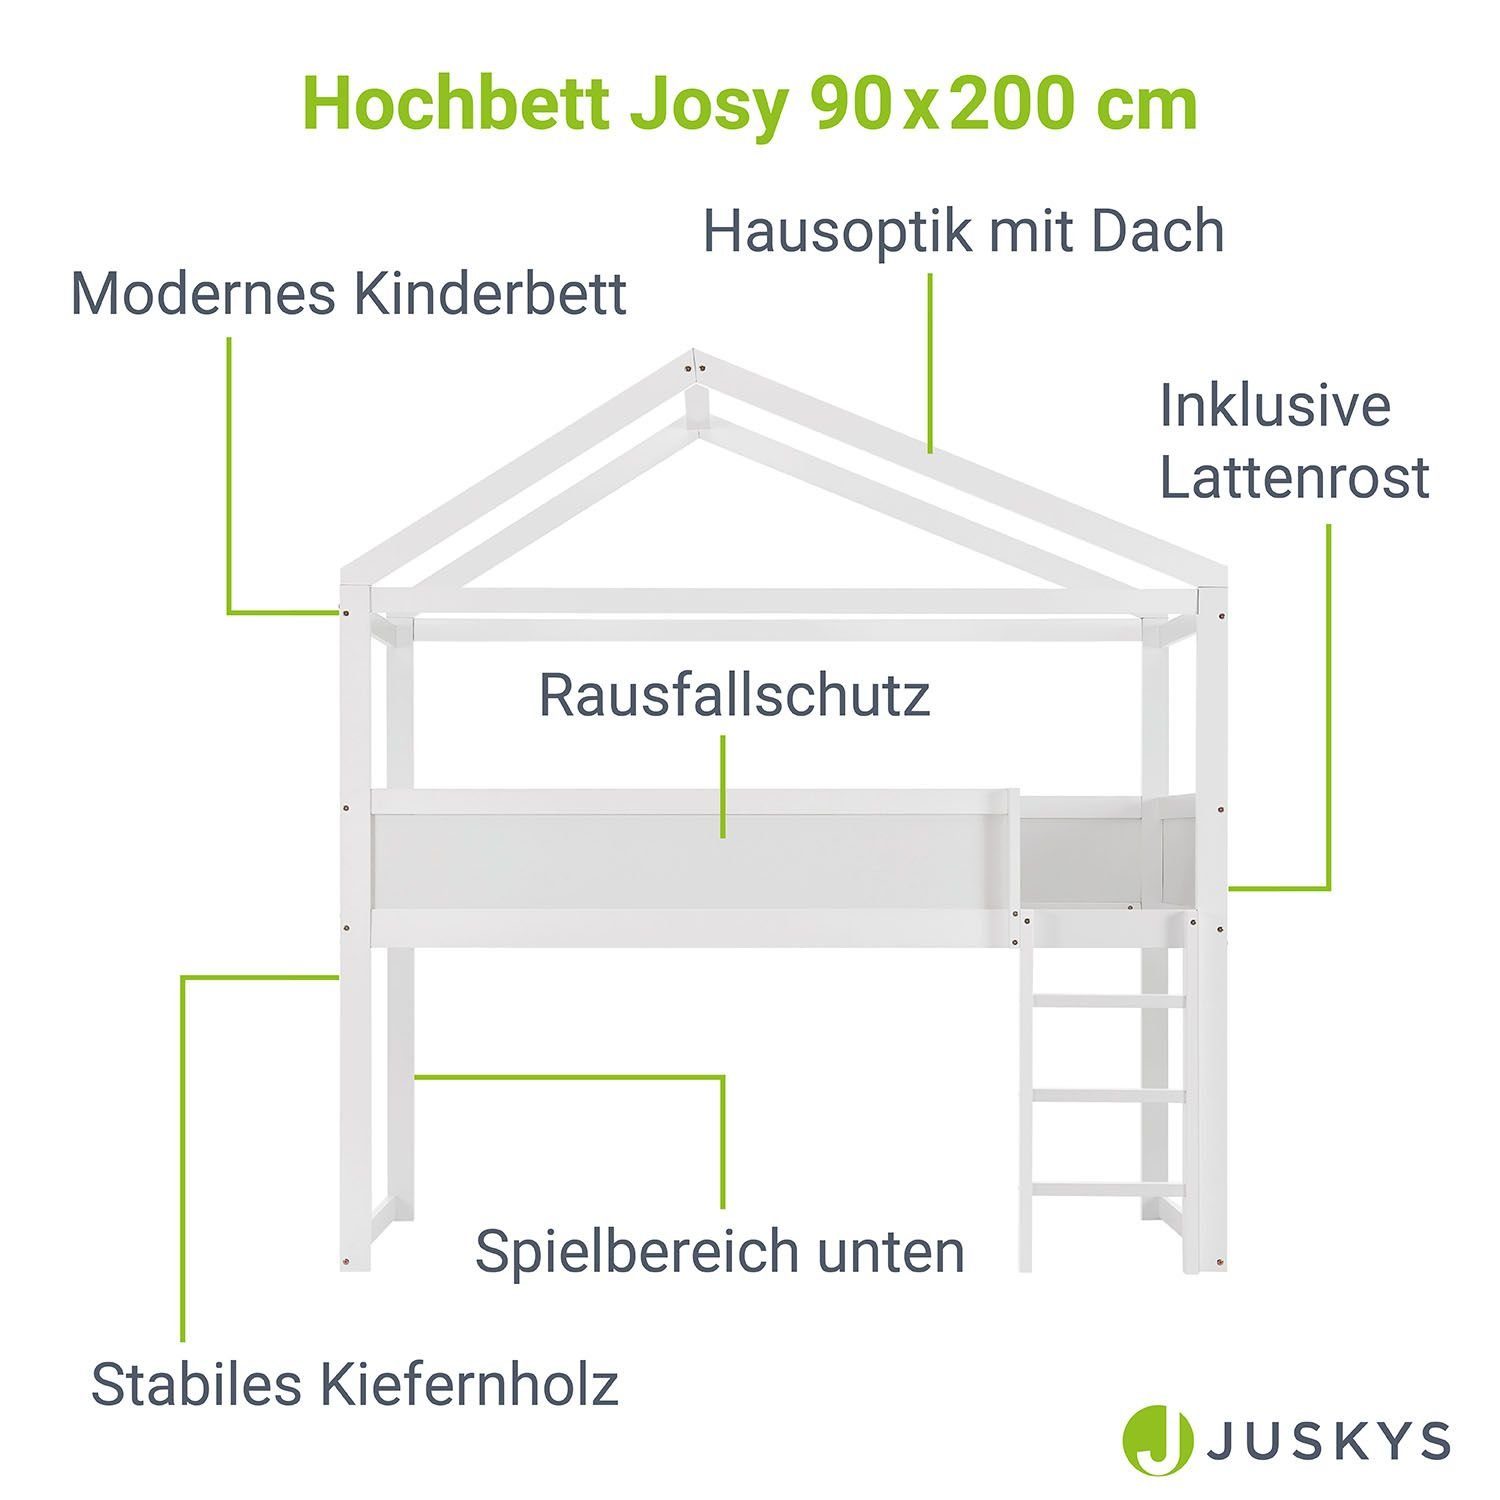 90x200 Josy, stabiles Kinderbett cm, Kiefernholz modernes Hochbett, Juskys Rausfallschutz,